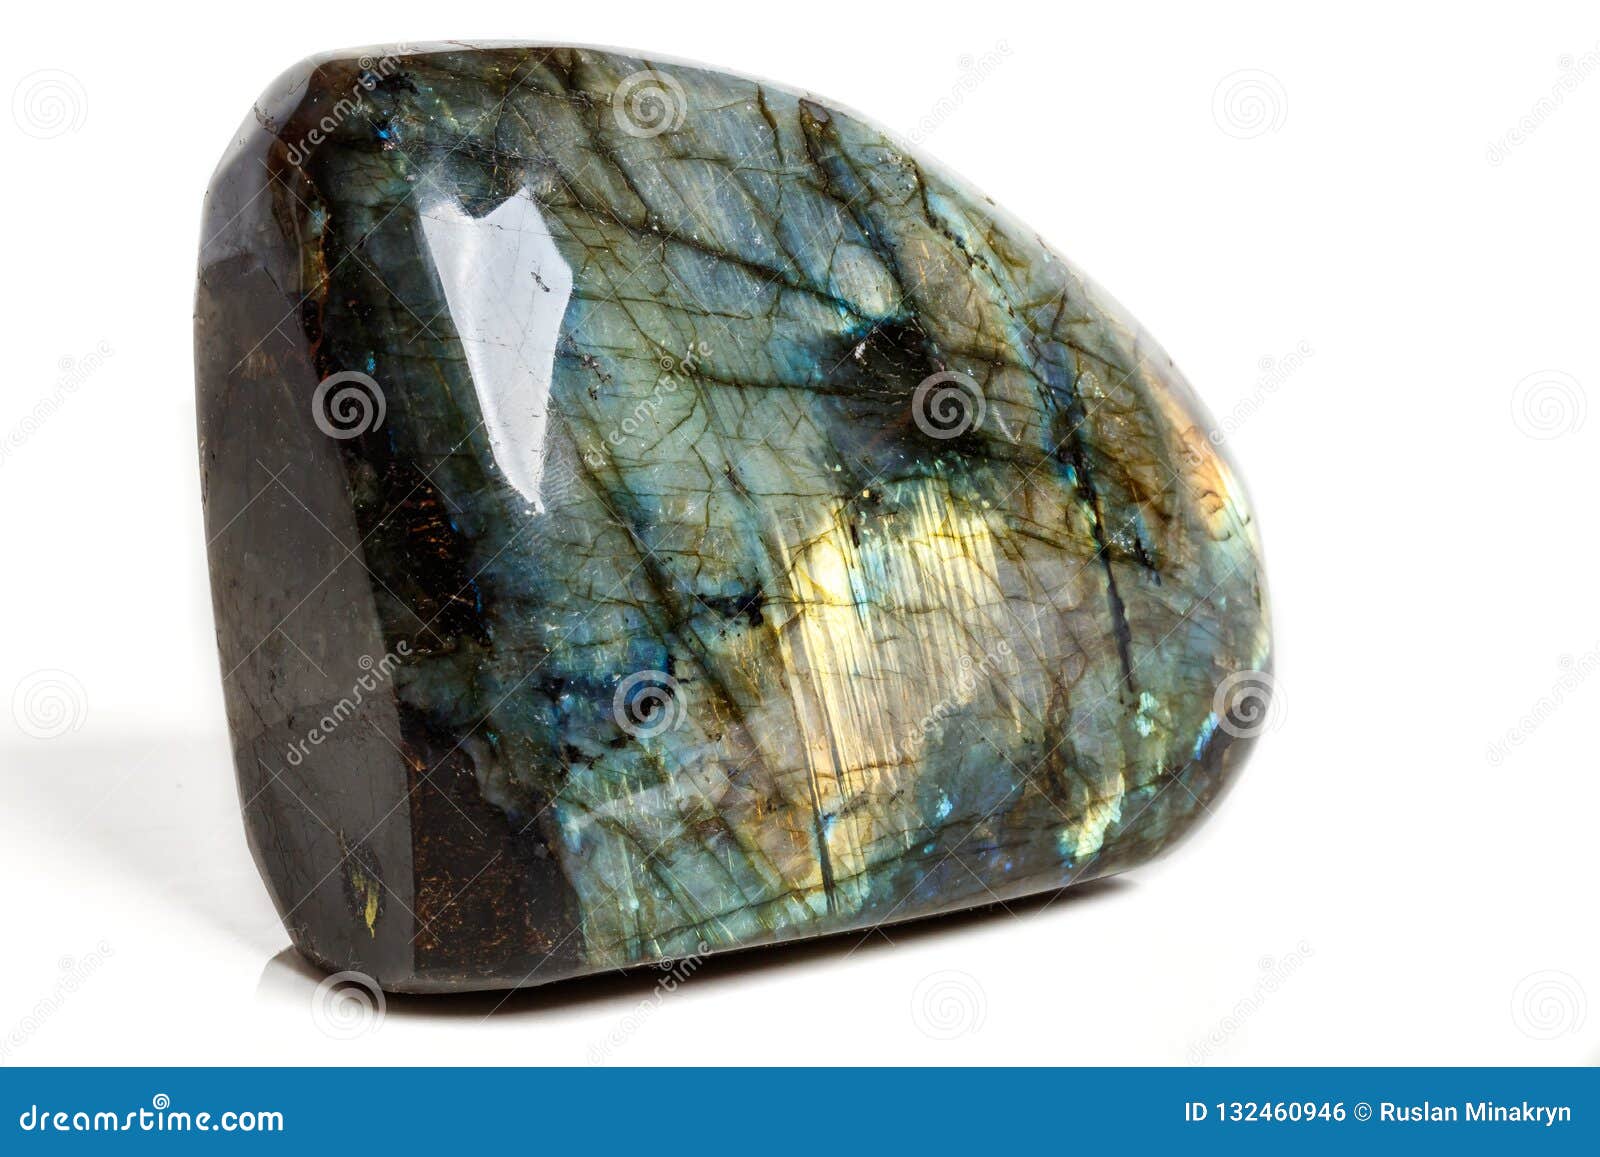 Macro Labradorite Mineral Stone on White Background Stock Photo - Image ...